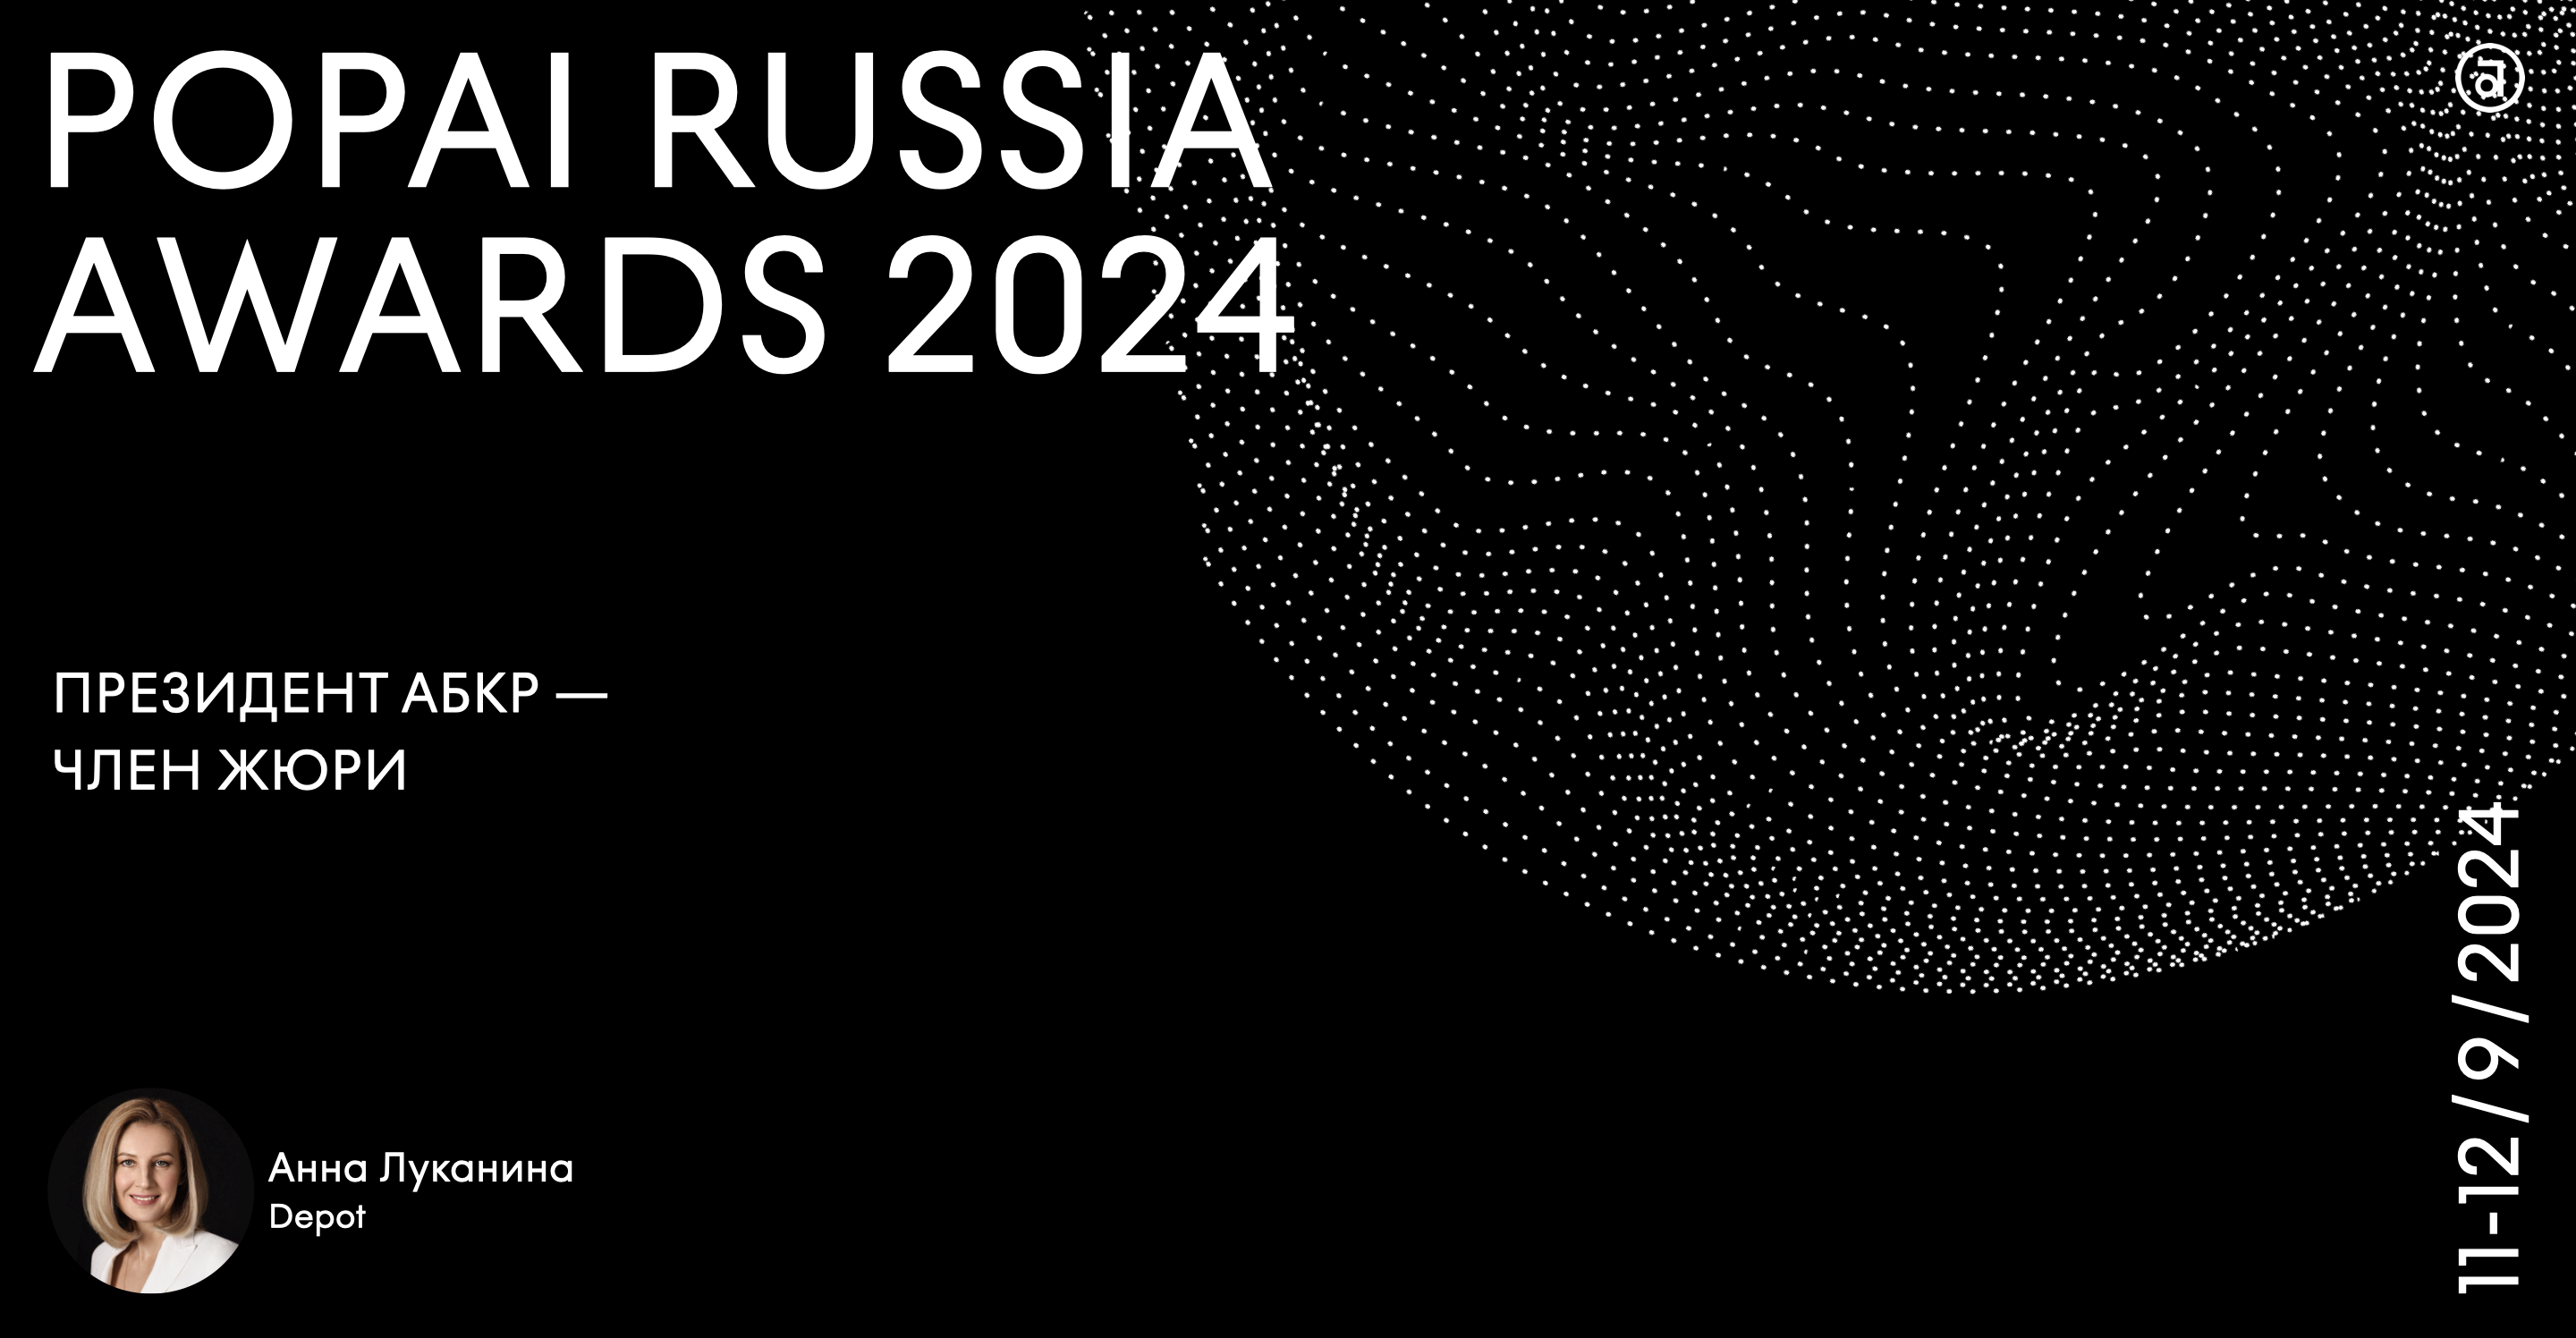      POPAI RUSSIA AWARDS 2024